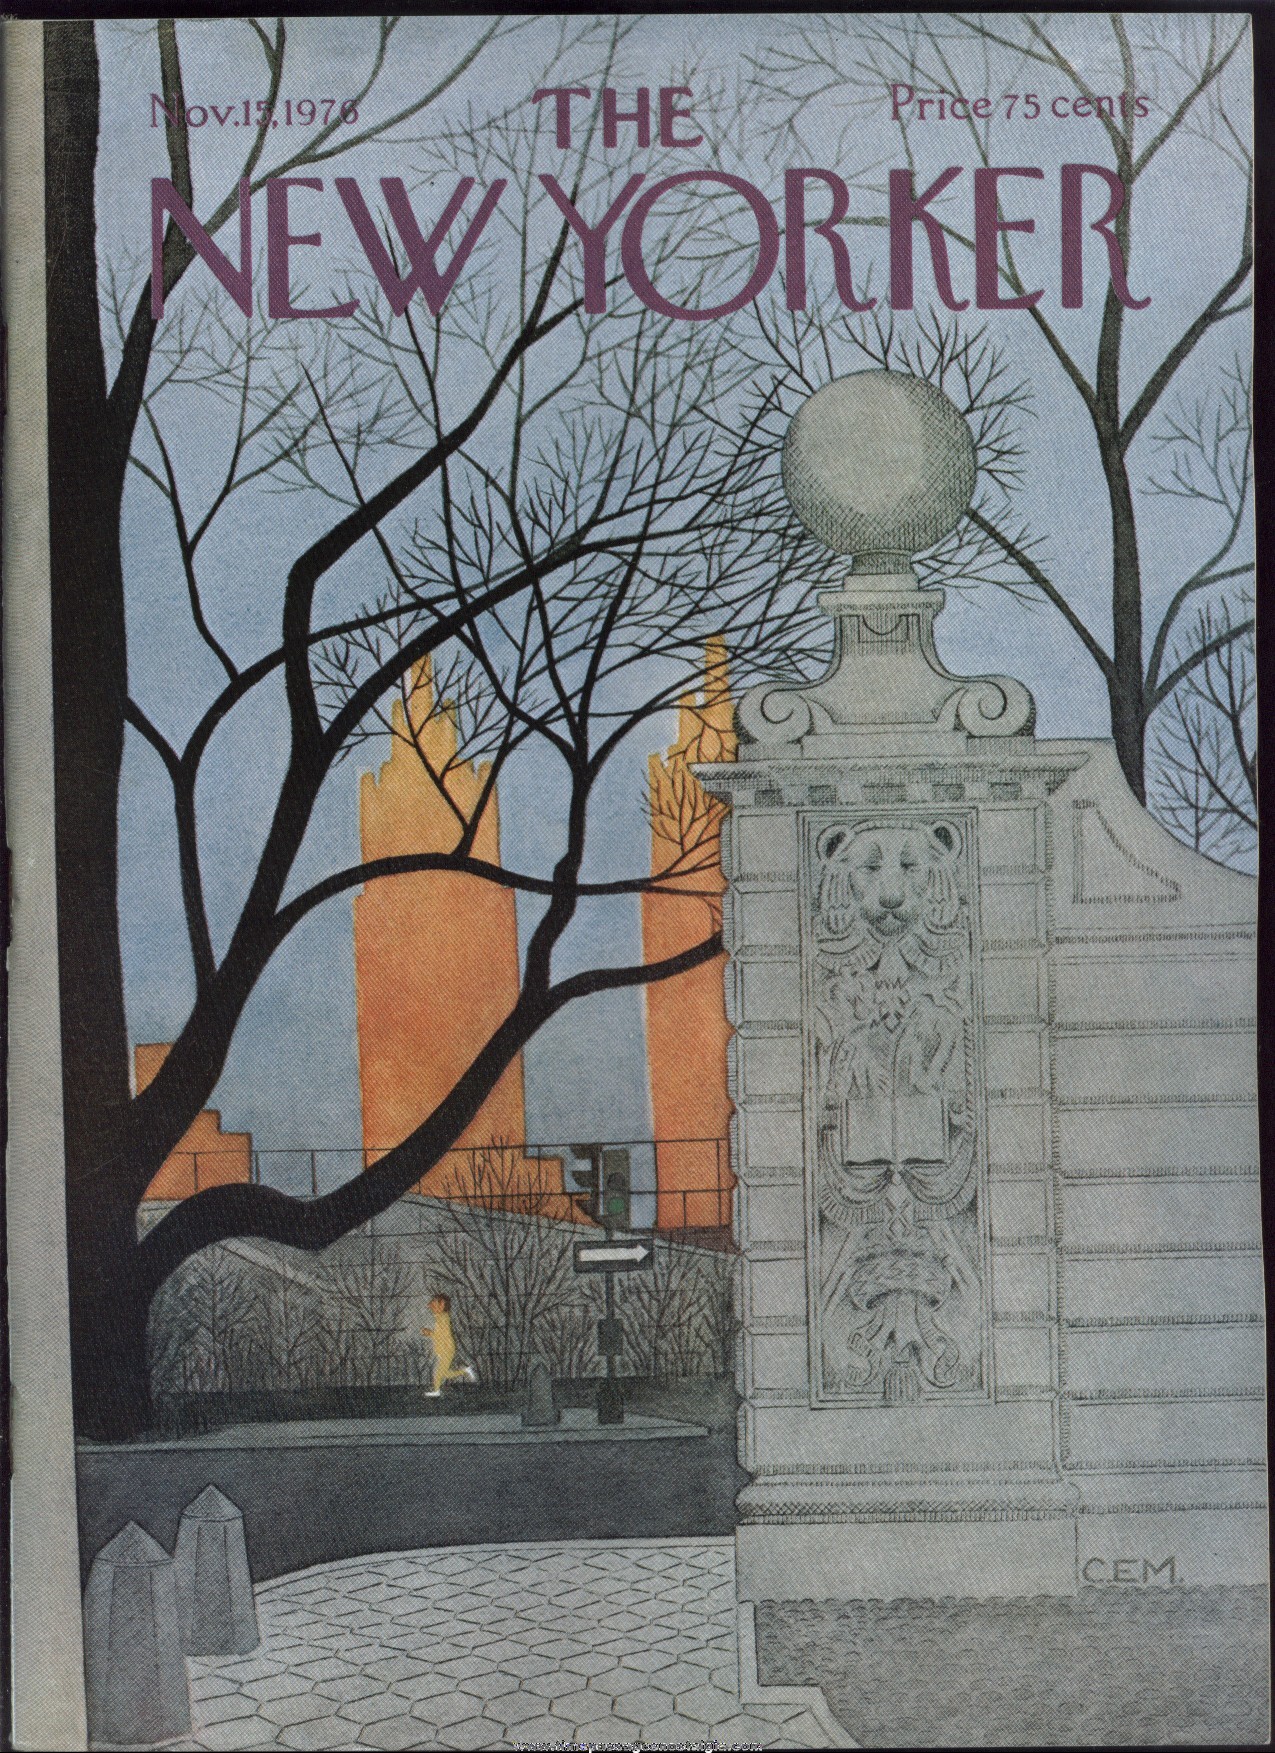 New Yorker Magazine - November 15, 1976 - Cover by Charles E. Martin